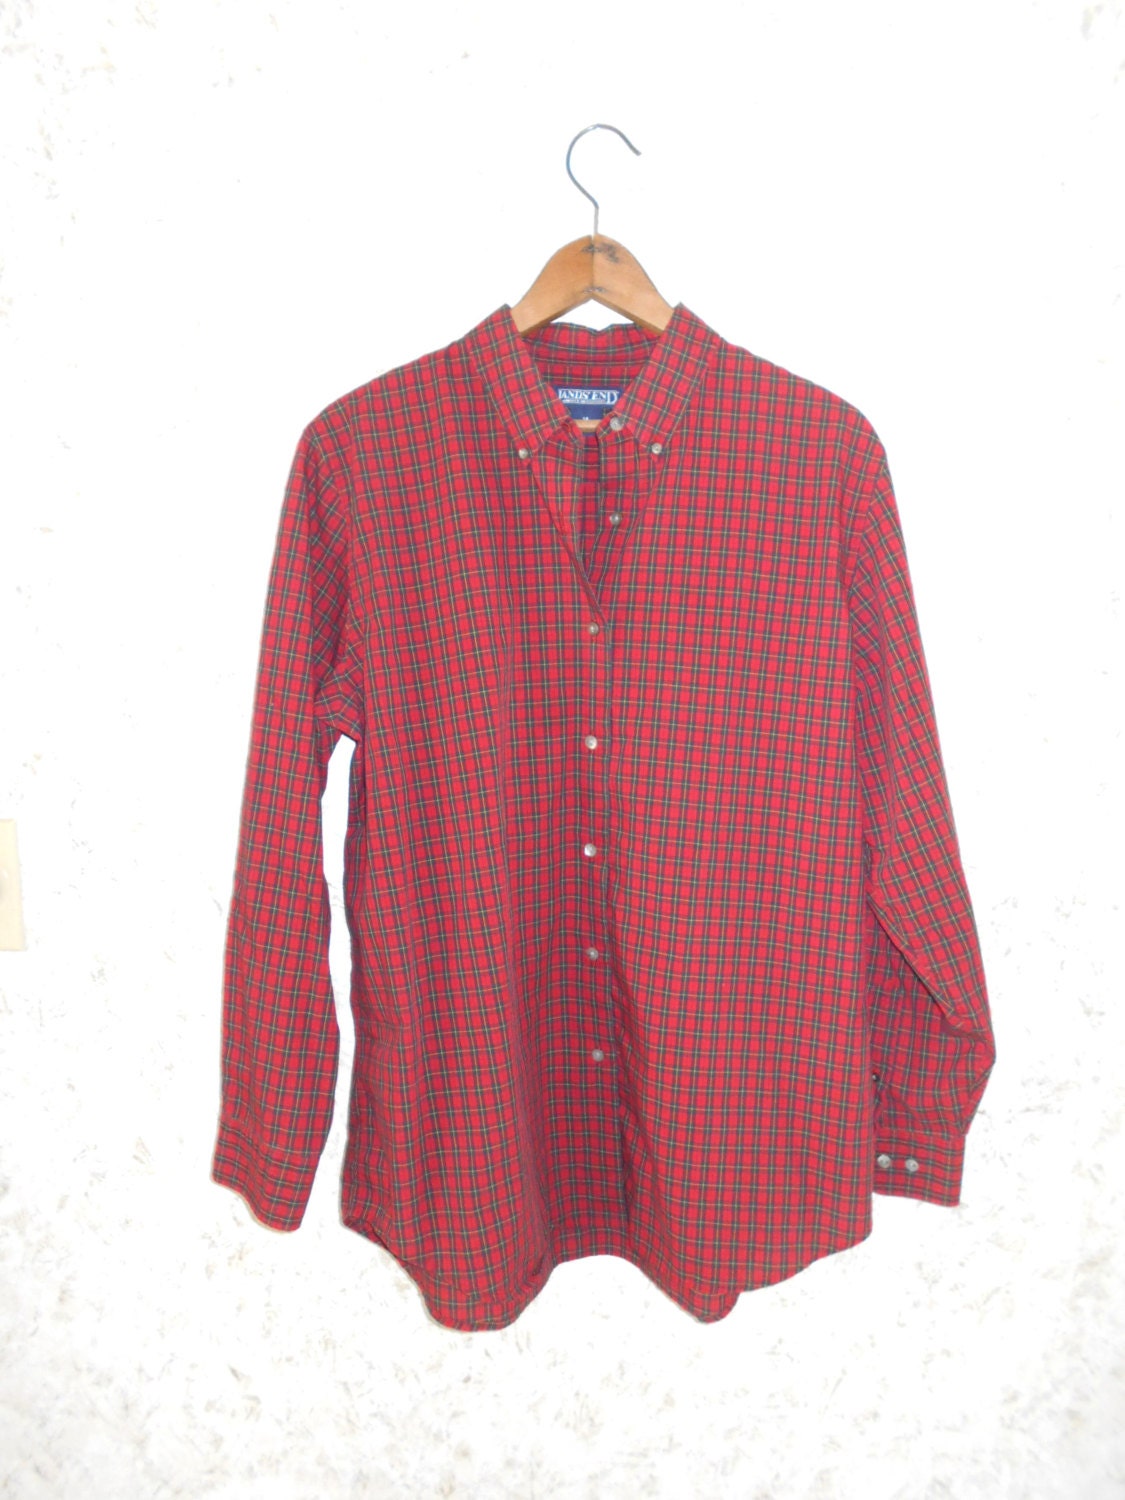 Vtg 80S Lands End Red Plaid Cotton Blend Blouse Shirt Top Button Front Long Sleeve Hipster Mod Womens Size 14